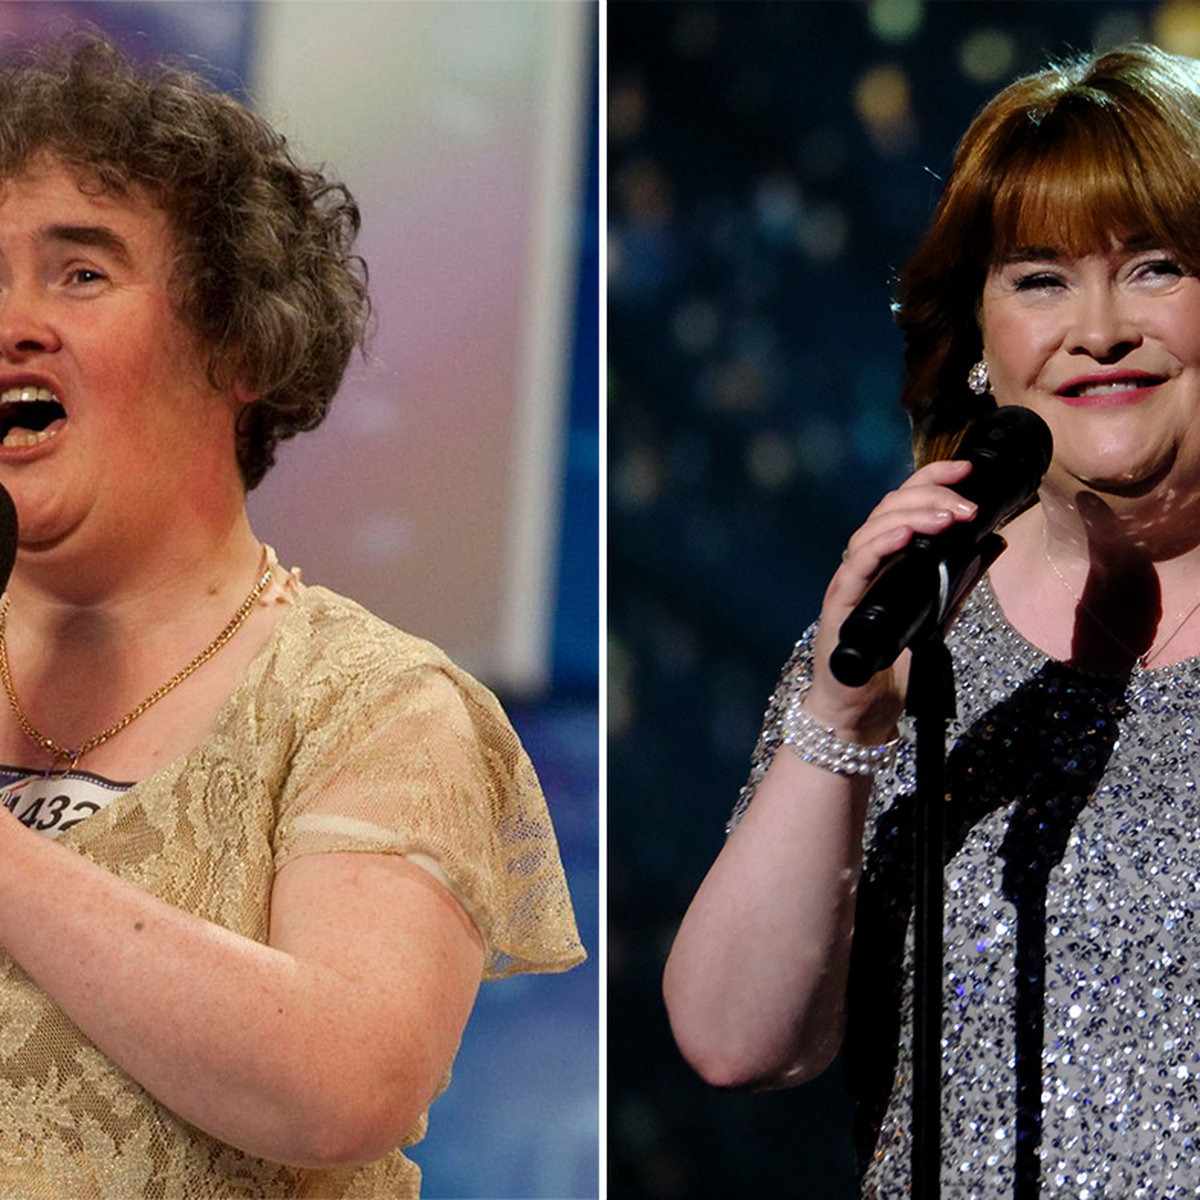 Susan Boyle had a stroke, returns to TV singing I Dreamed a Dream